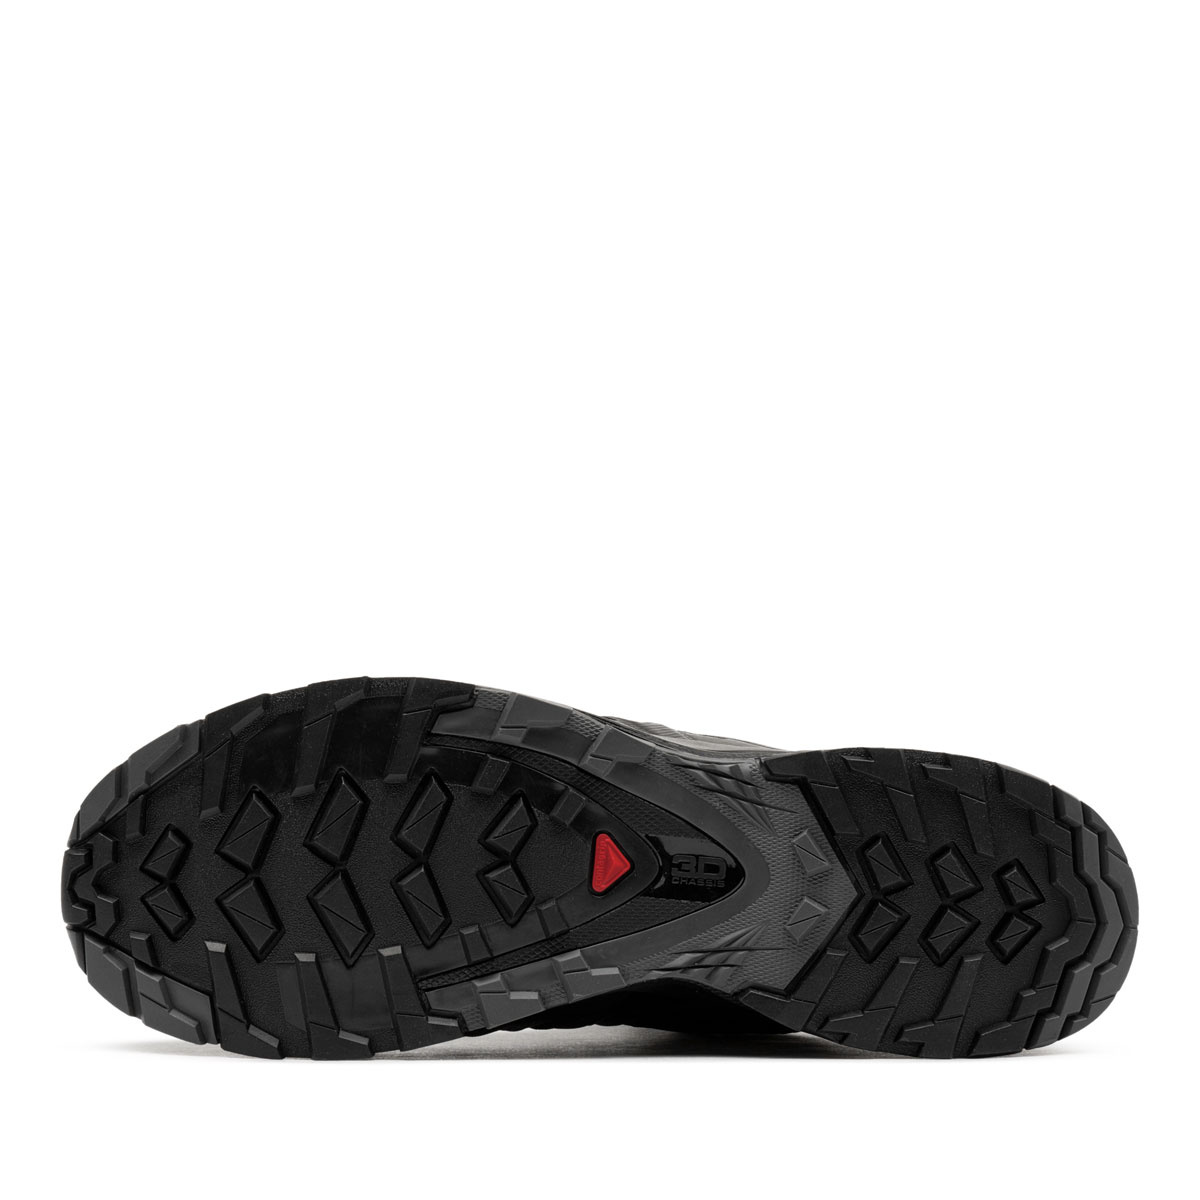 Salomon XA Pro 3D V8 Мъжки спортни обувки 416891